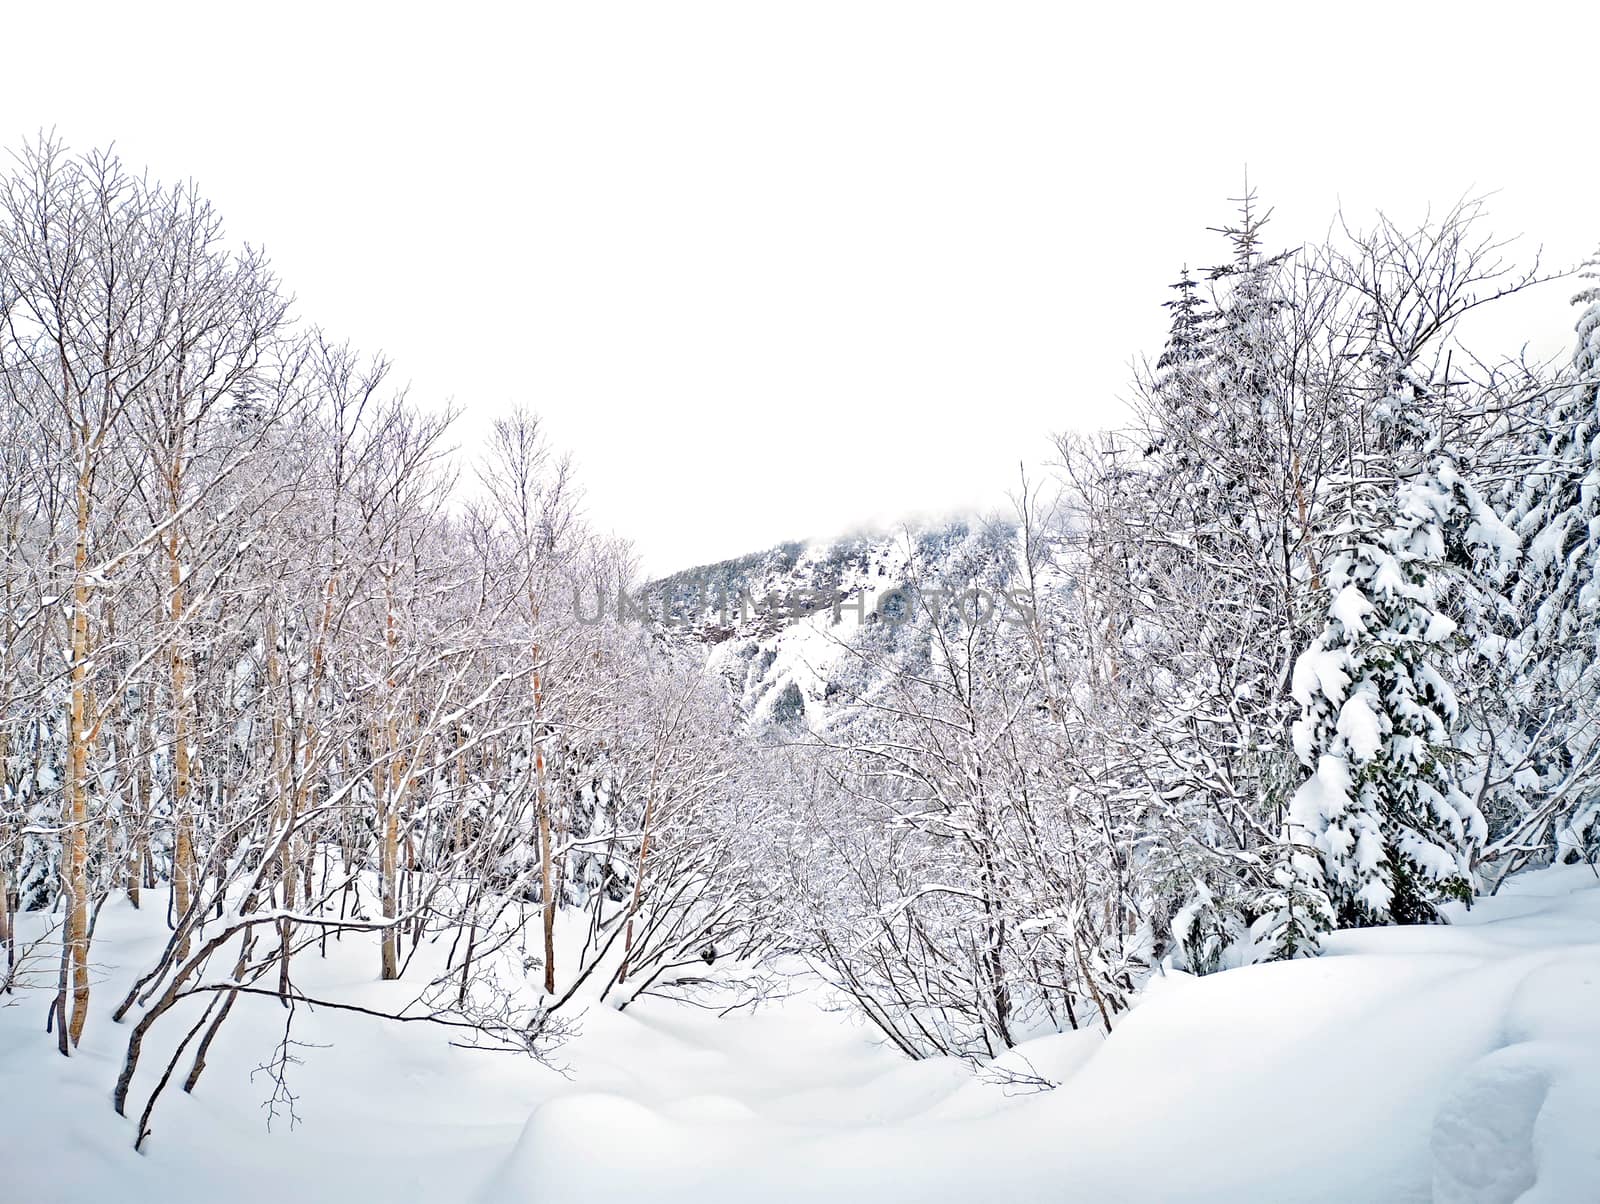 natural snow hill and tree in Japan Yatsugatake mountains
 by cougarsan